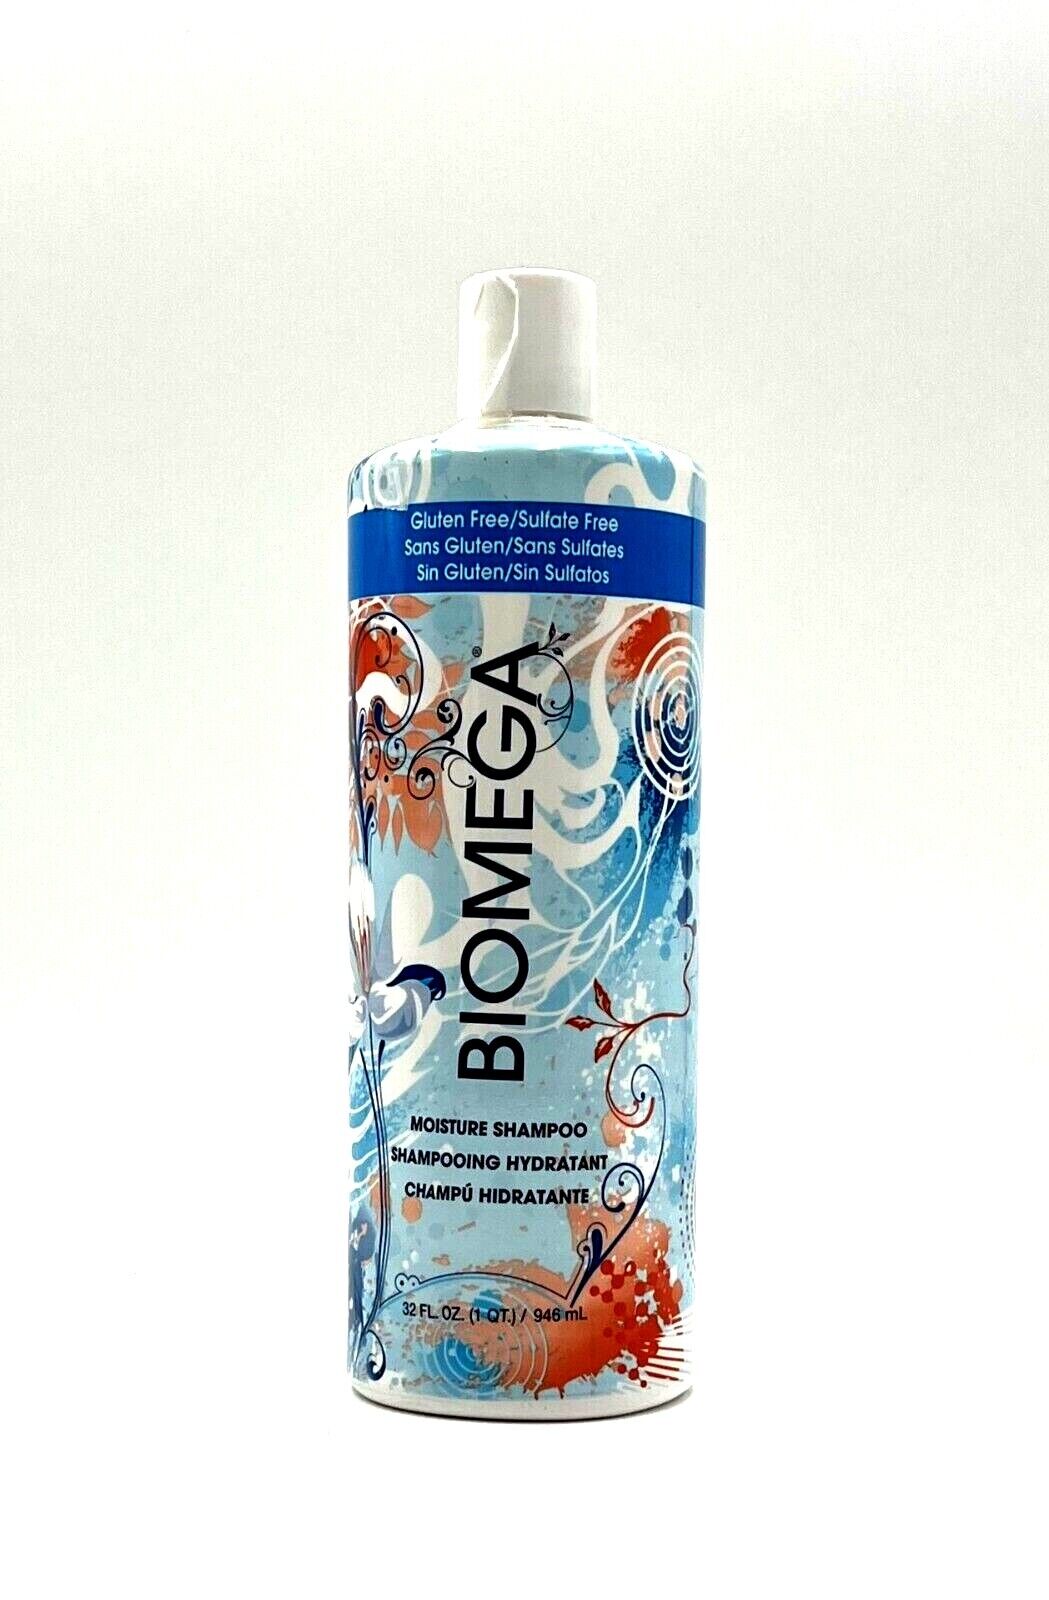 fuzzy Luftpost magi Aquage Biomega Gluten/Sulfate Free Moisture Shampoo 32 oz | eBay